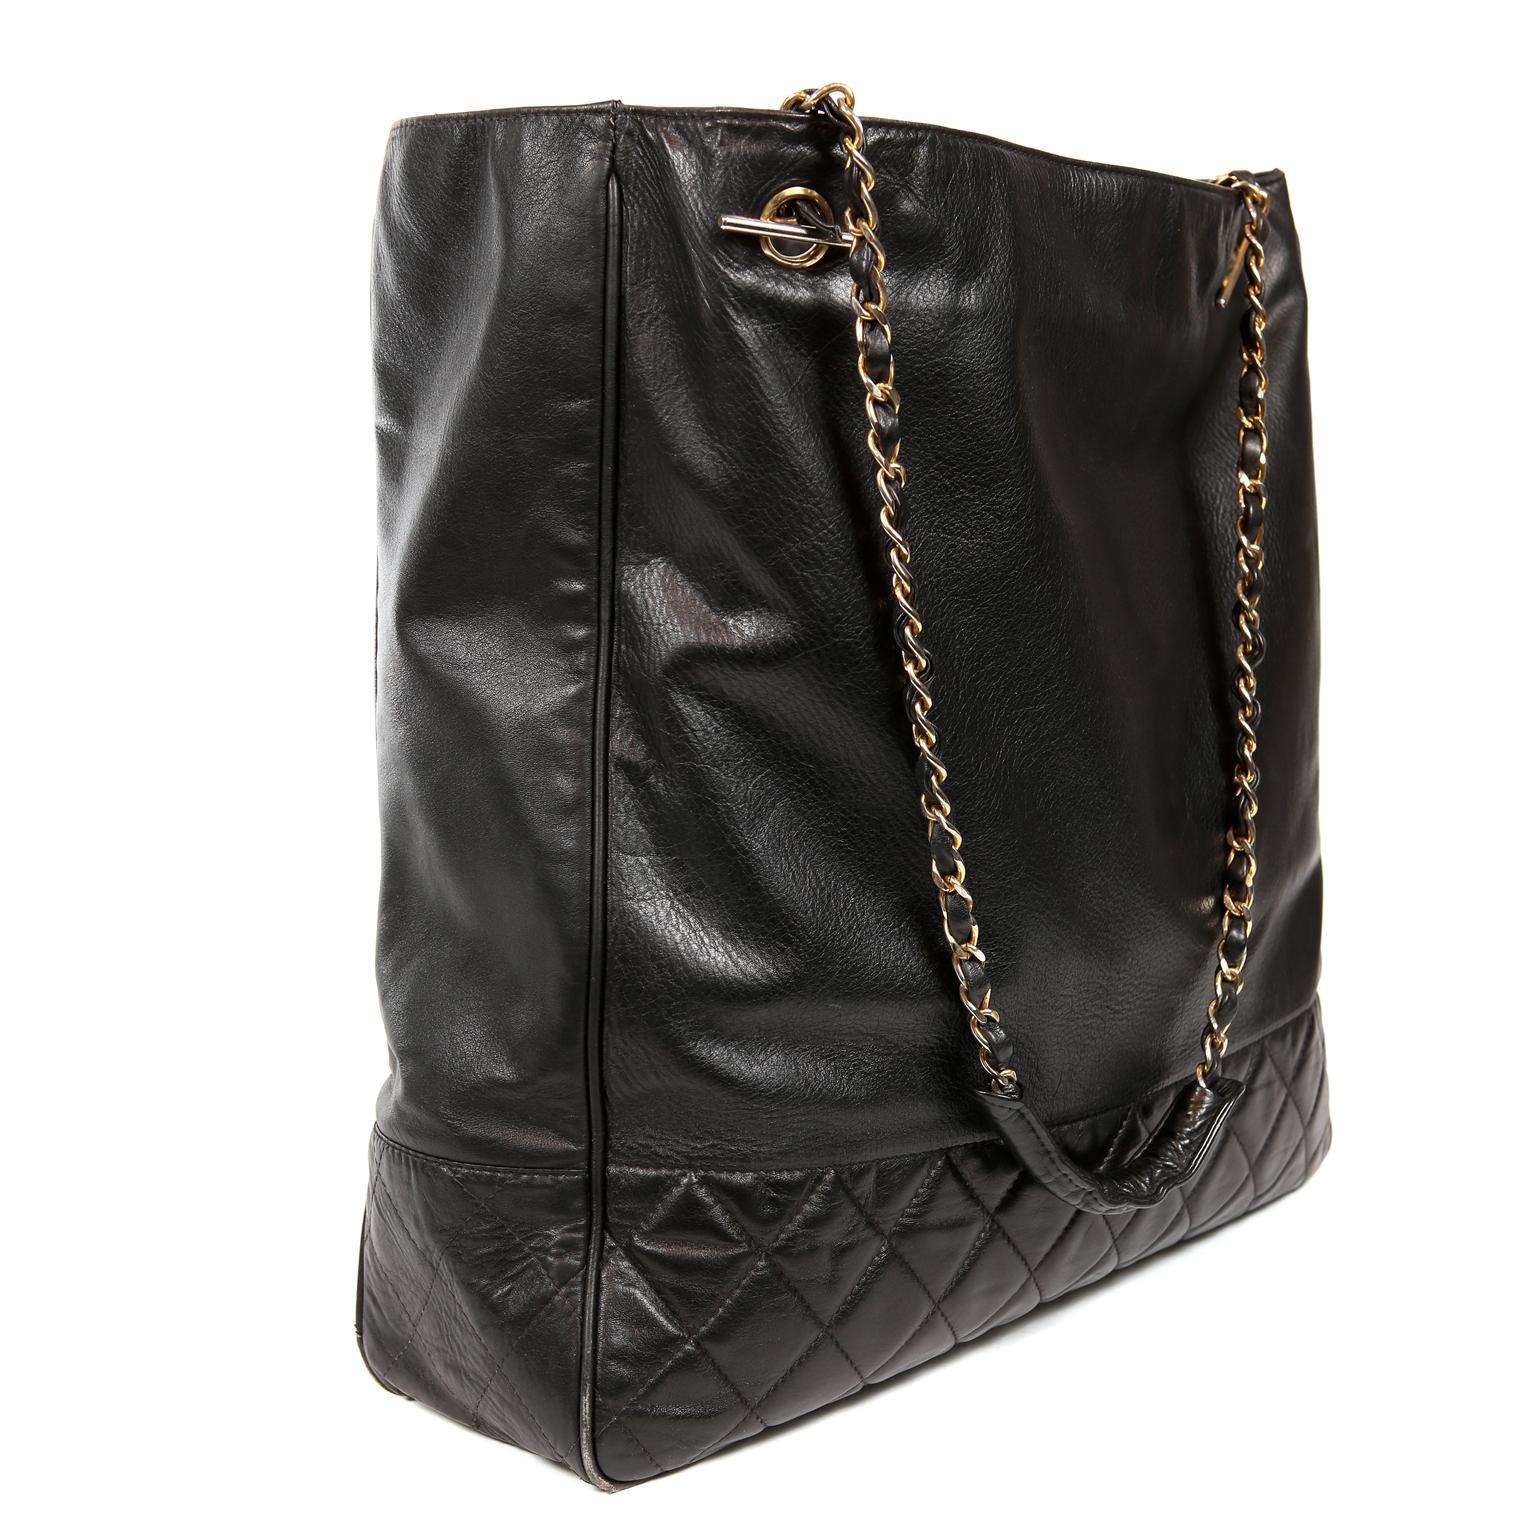 Women's Chanel Black Leather Large Vintage Tote bag